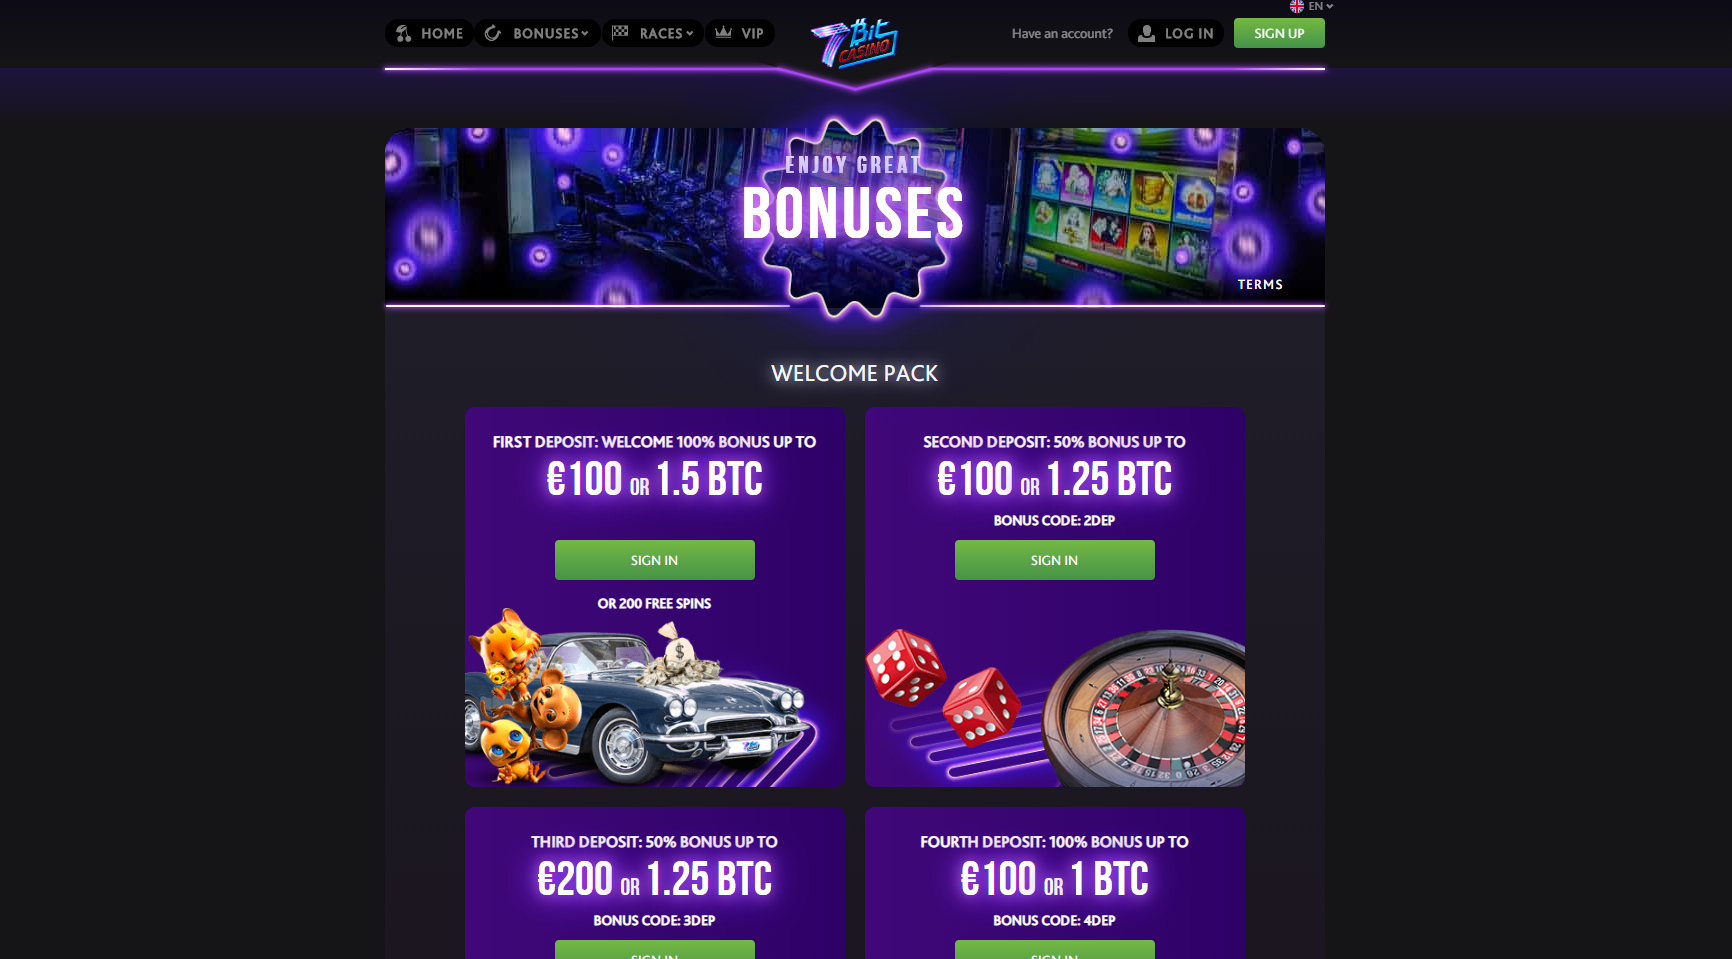 7bitcasino bonus code promo code - 7bit casino no deposit bonus enjoy great bonuses 100€ 1btc roulette dice fun car cash